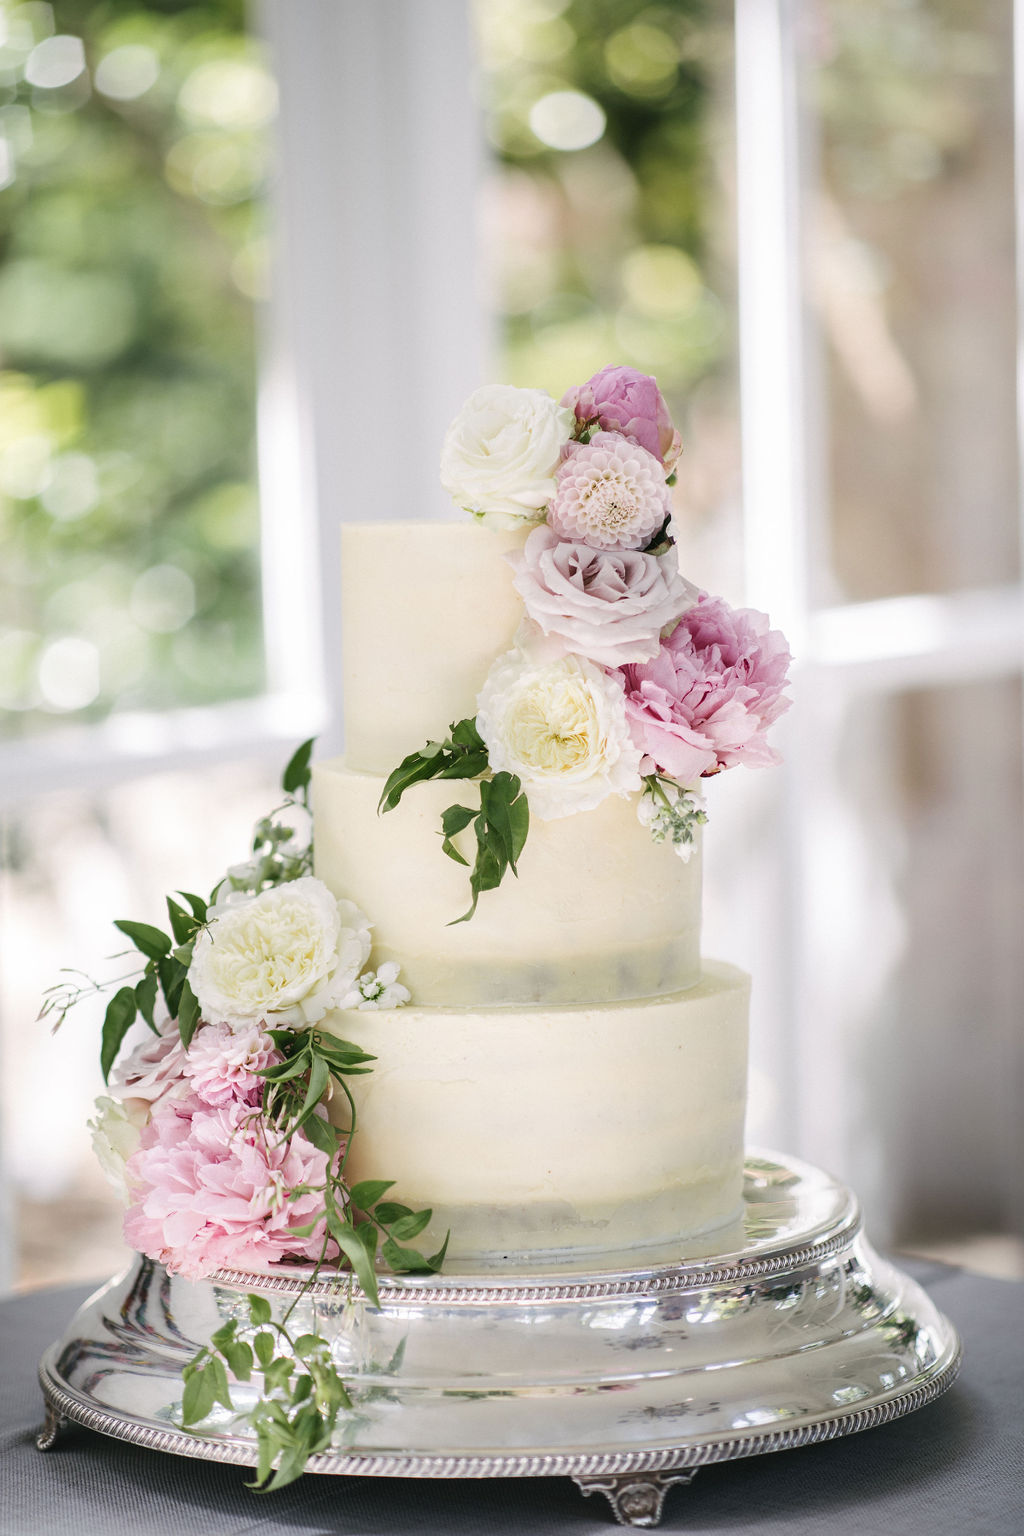 Modern elegant buttercream wedding cake decorated with Spring flowers. Photo by Kari Bellamy